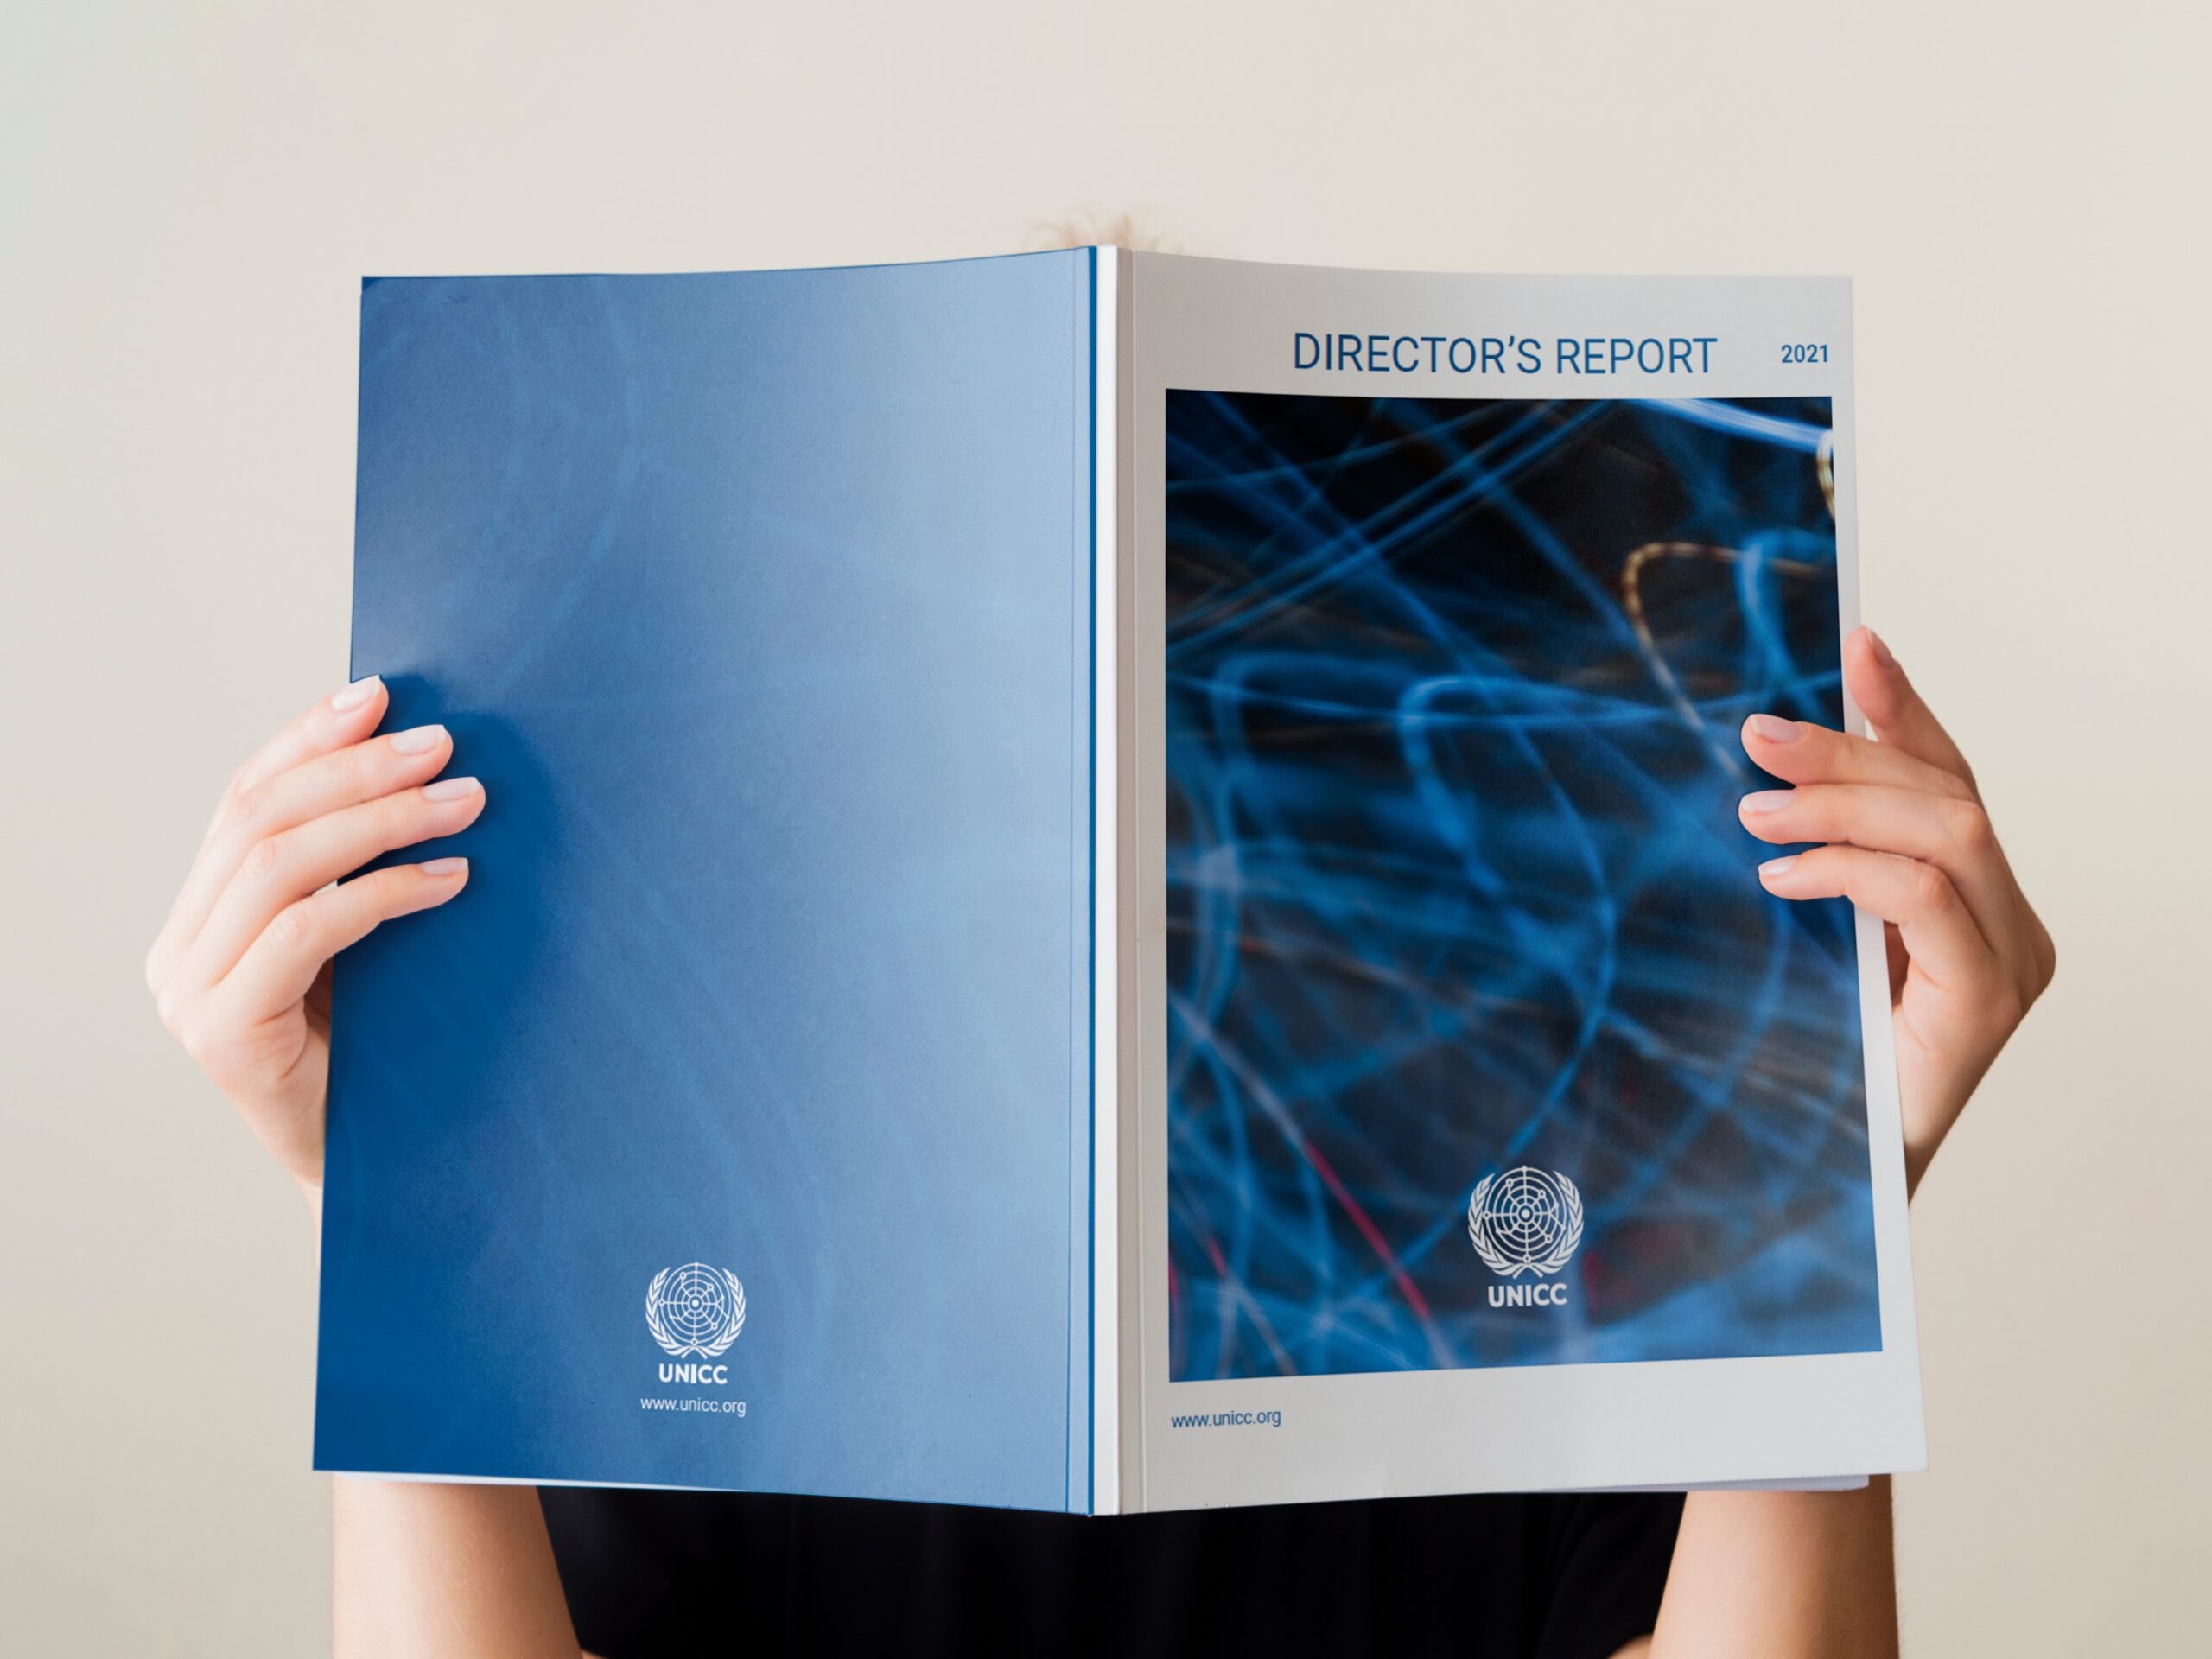 UNICC Director's Report 2021